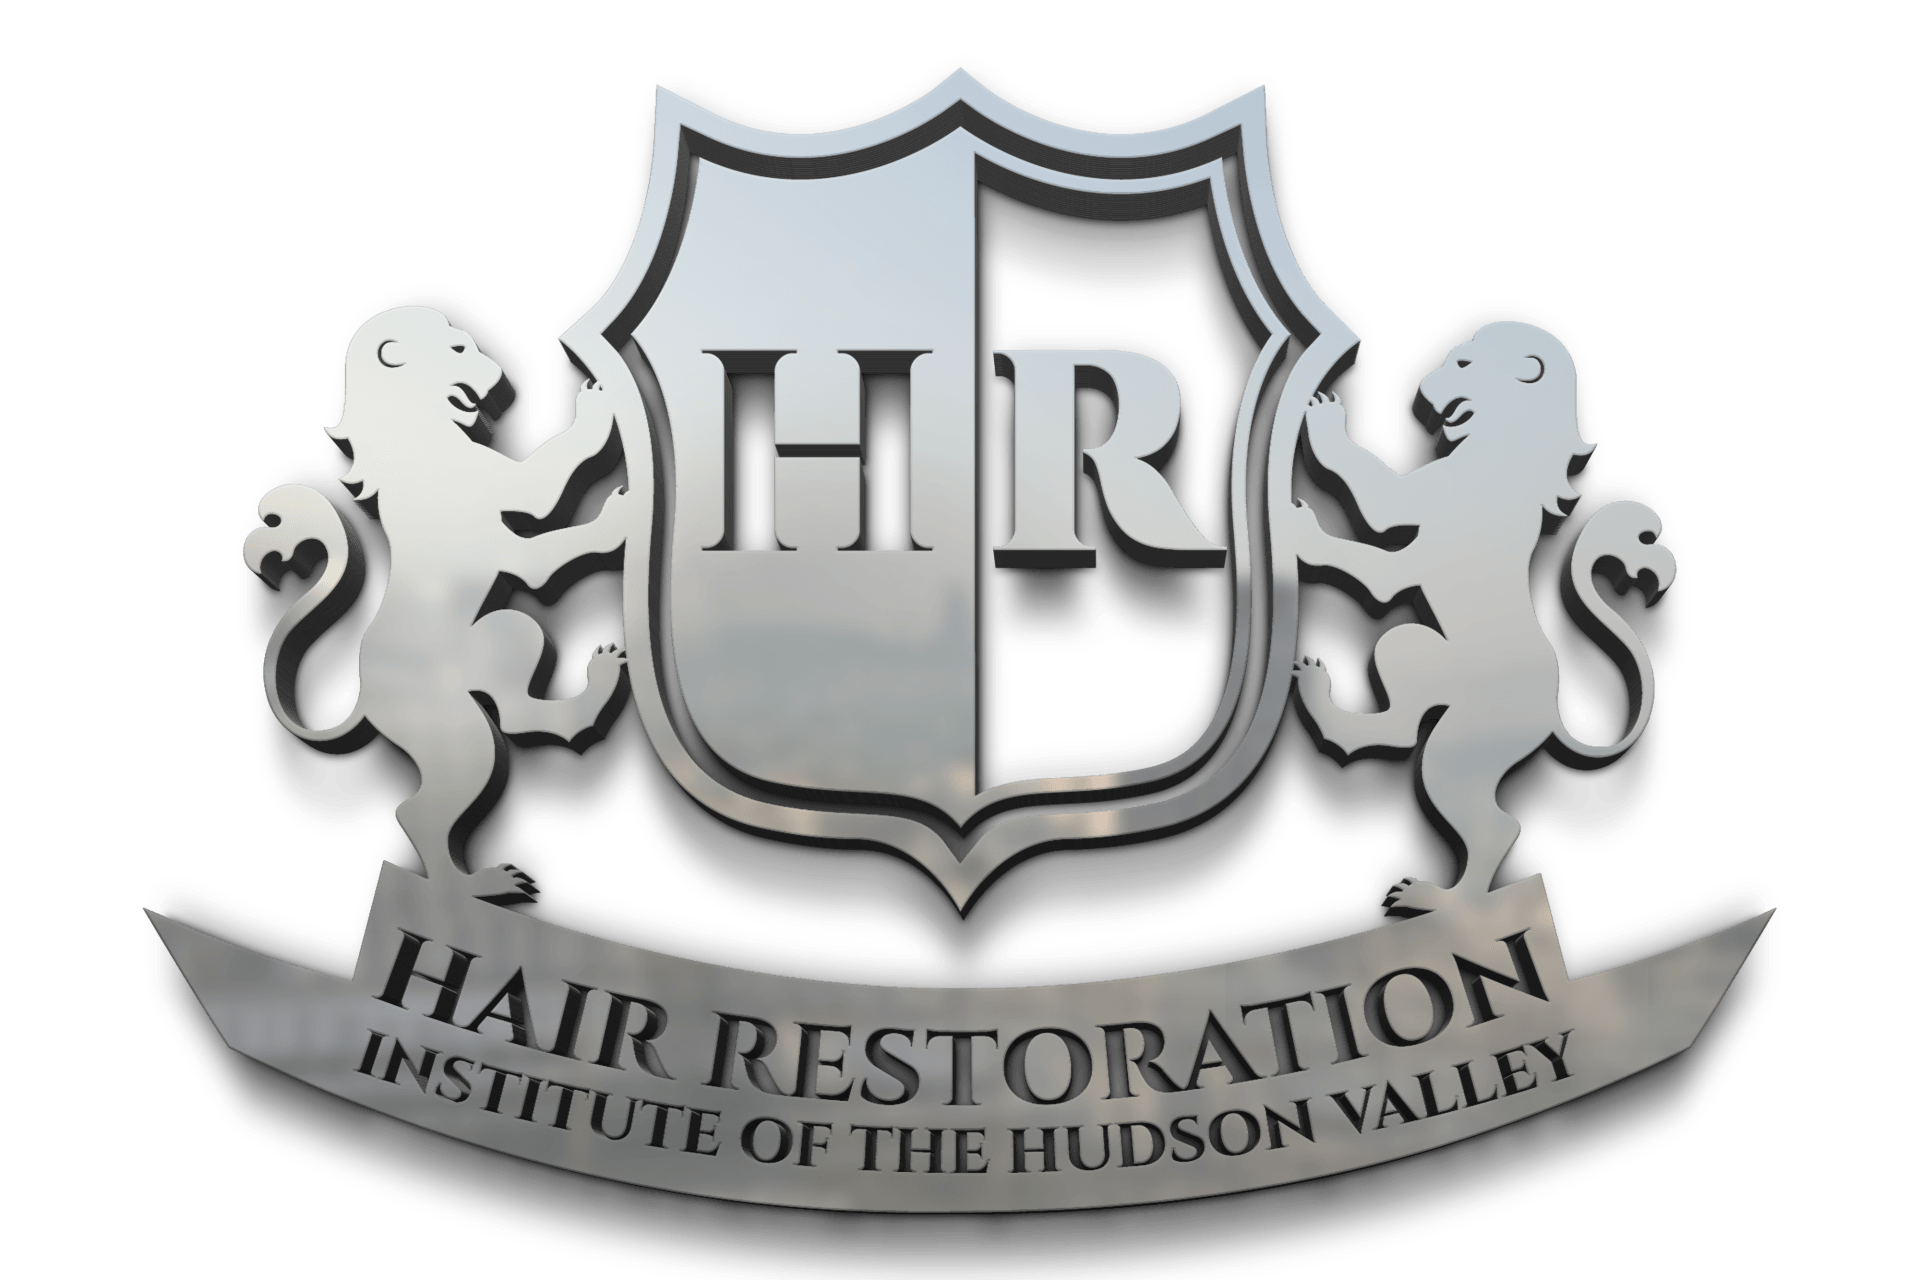 Hair Restoration Institute of the Hudson Valley Logo